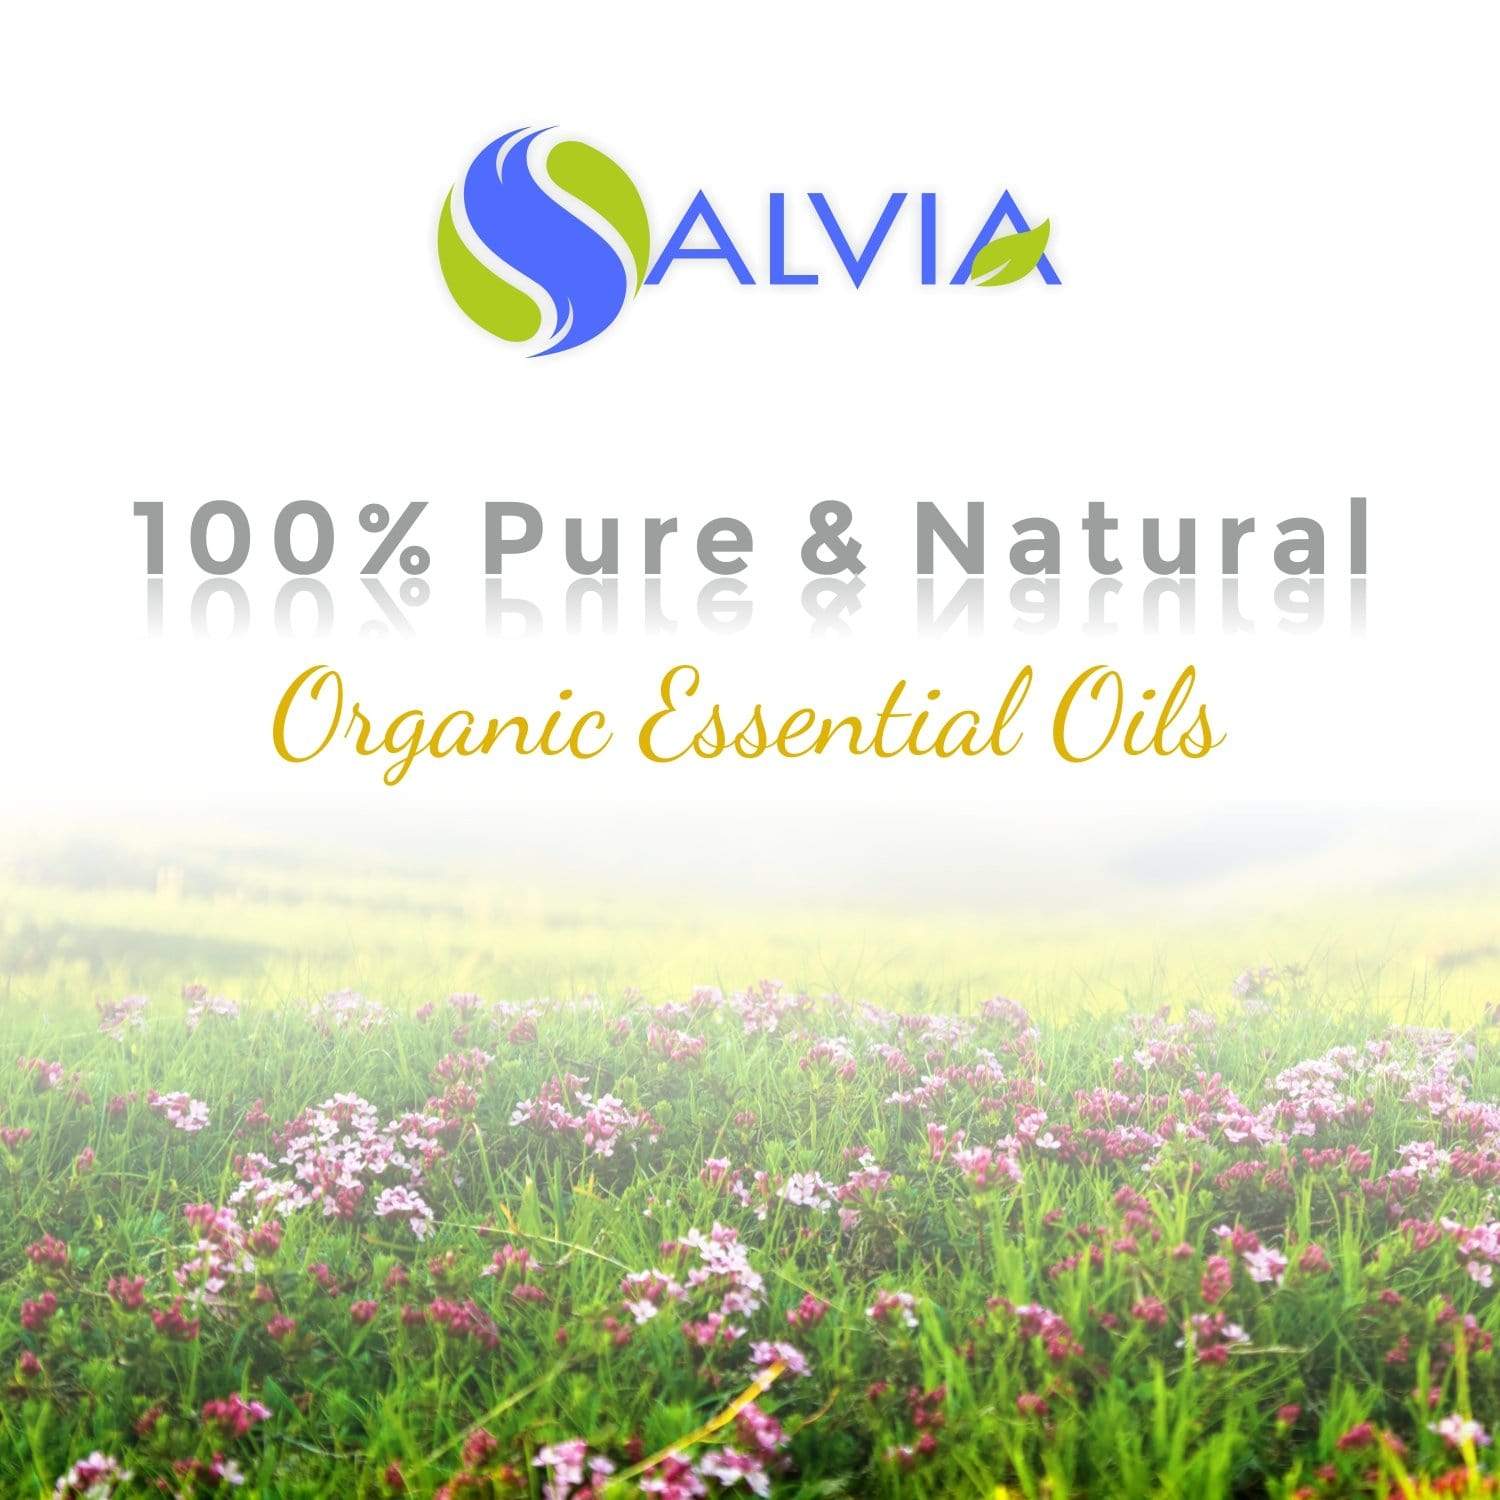 Salvia Organic Essential Oils Organic Sage Essential Oil